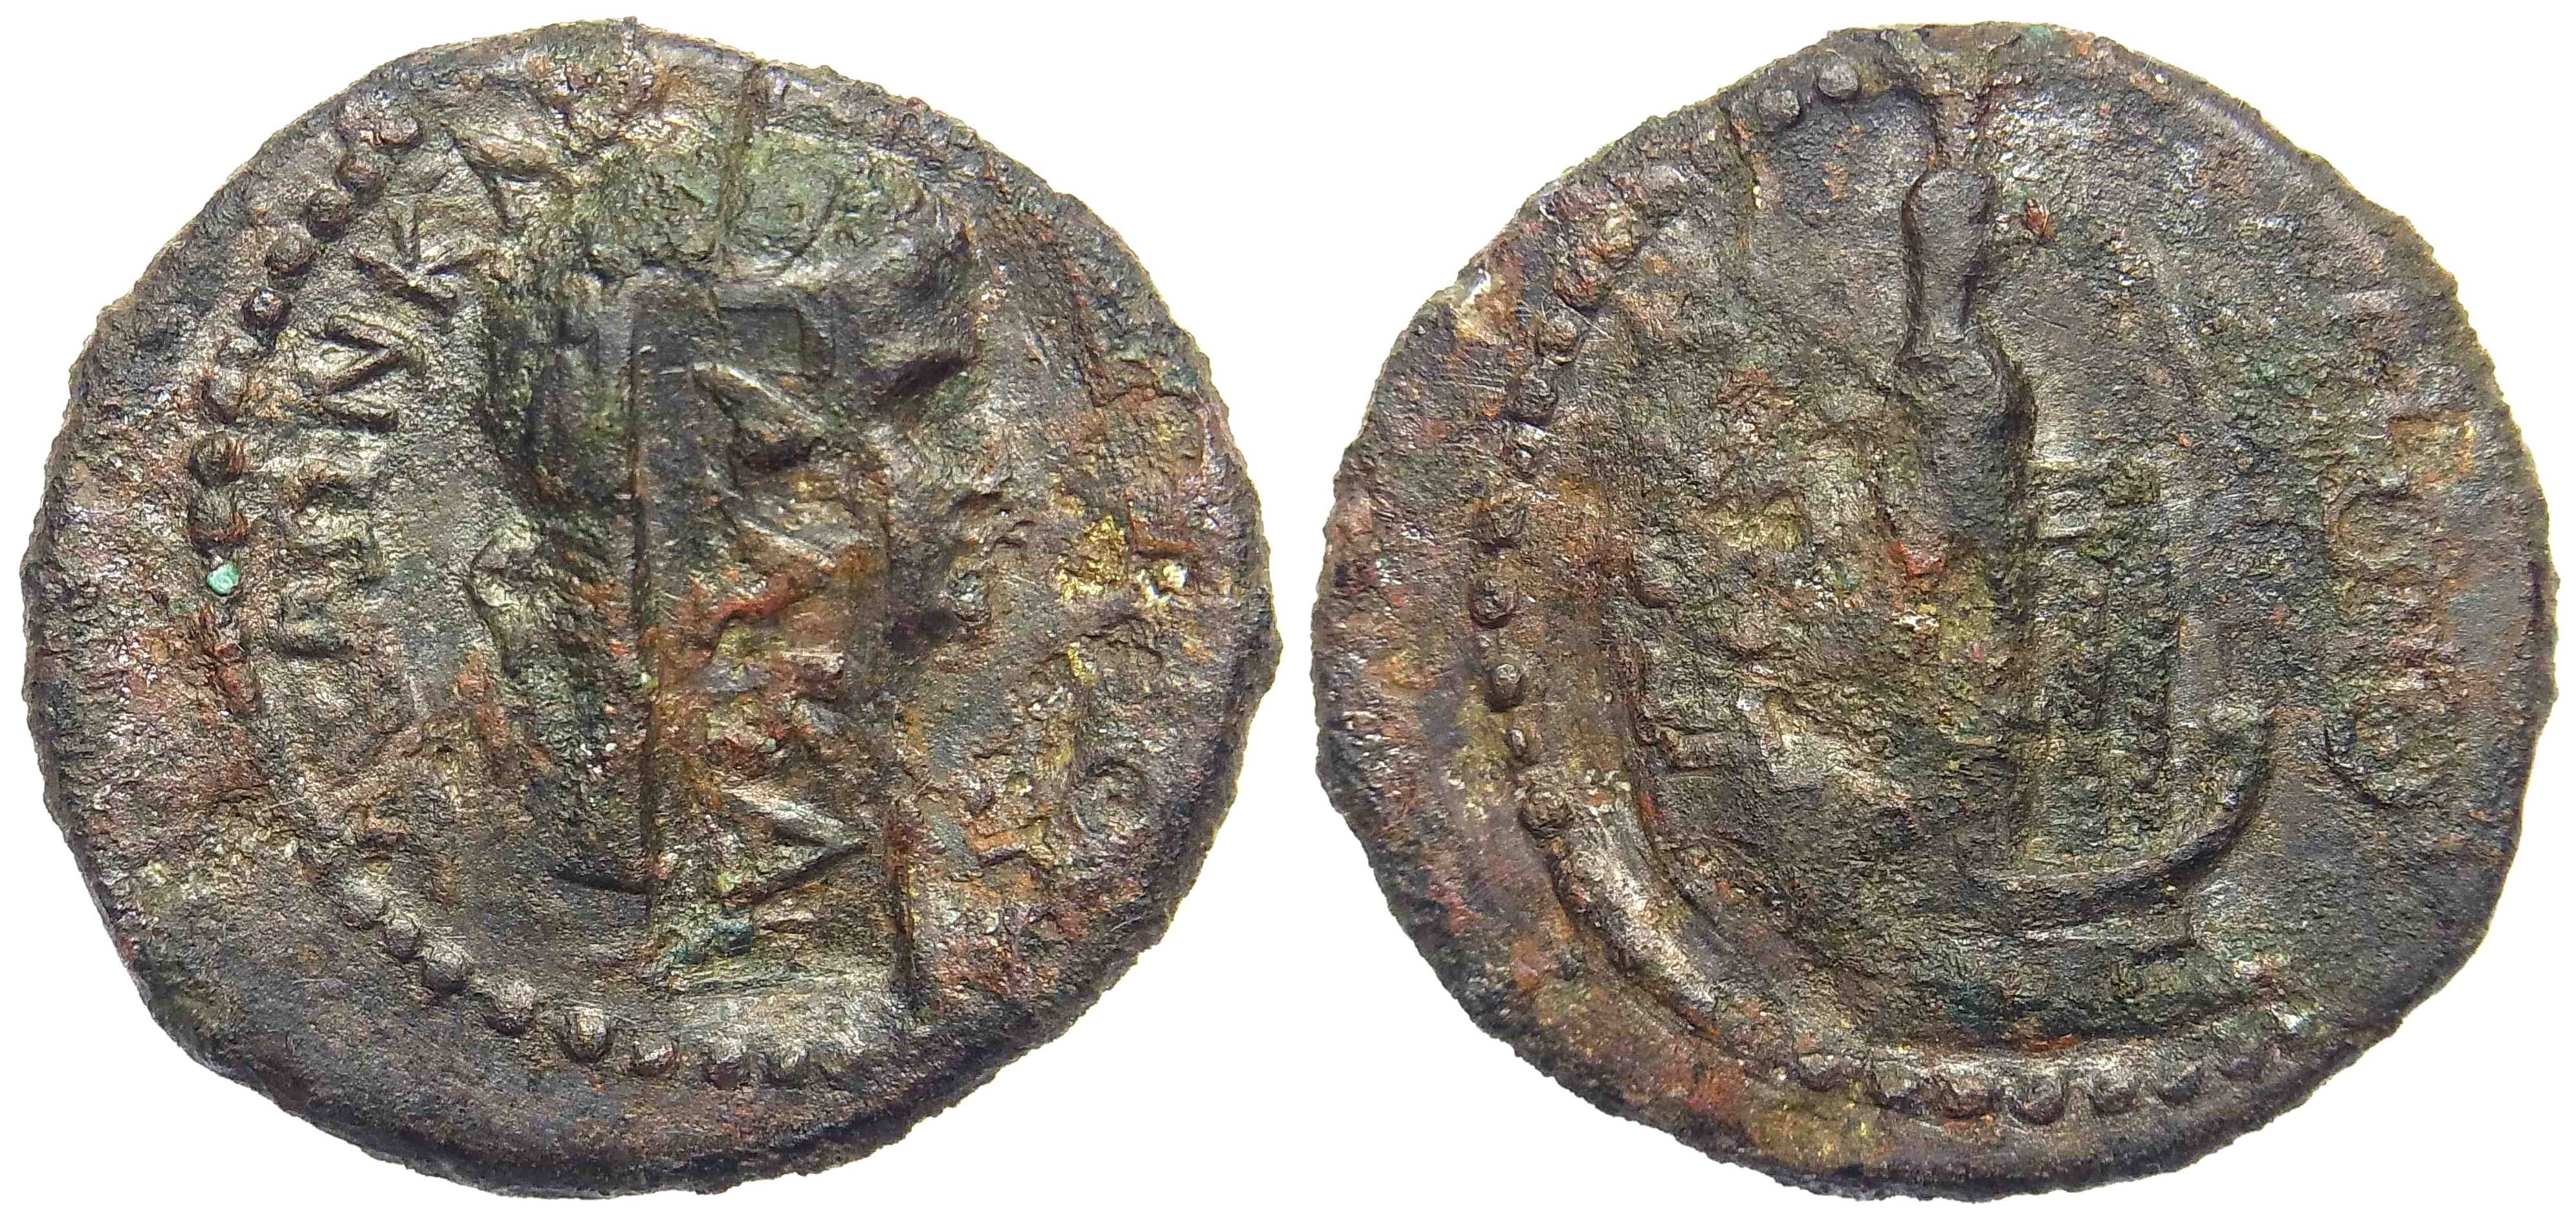 4944 Perinthus Thracia Nero AE